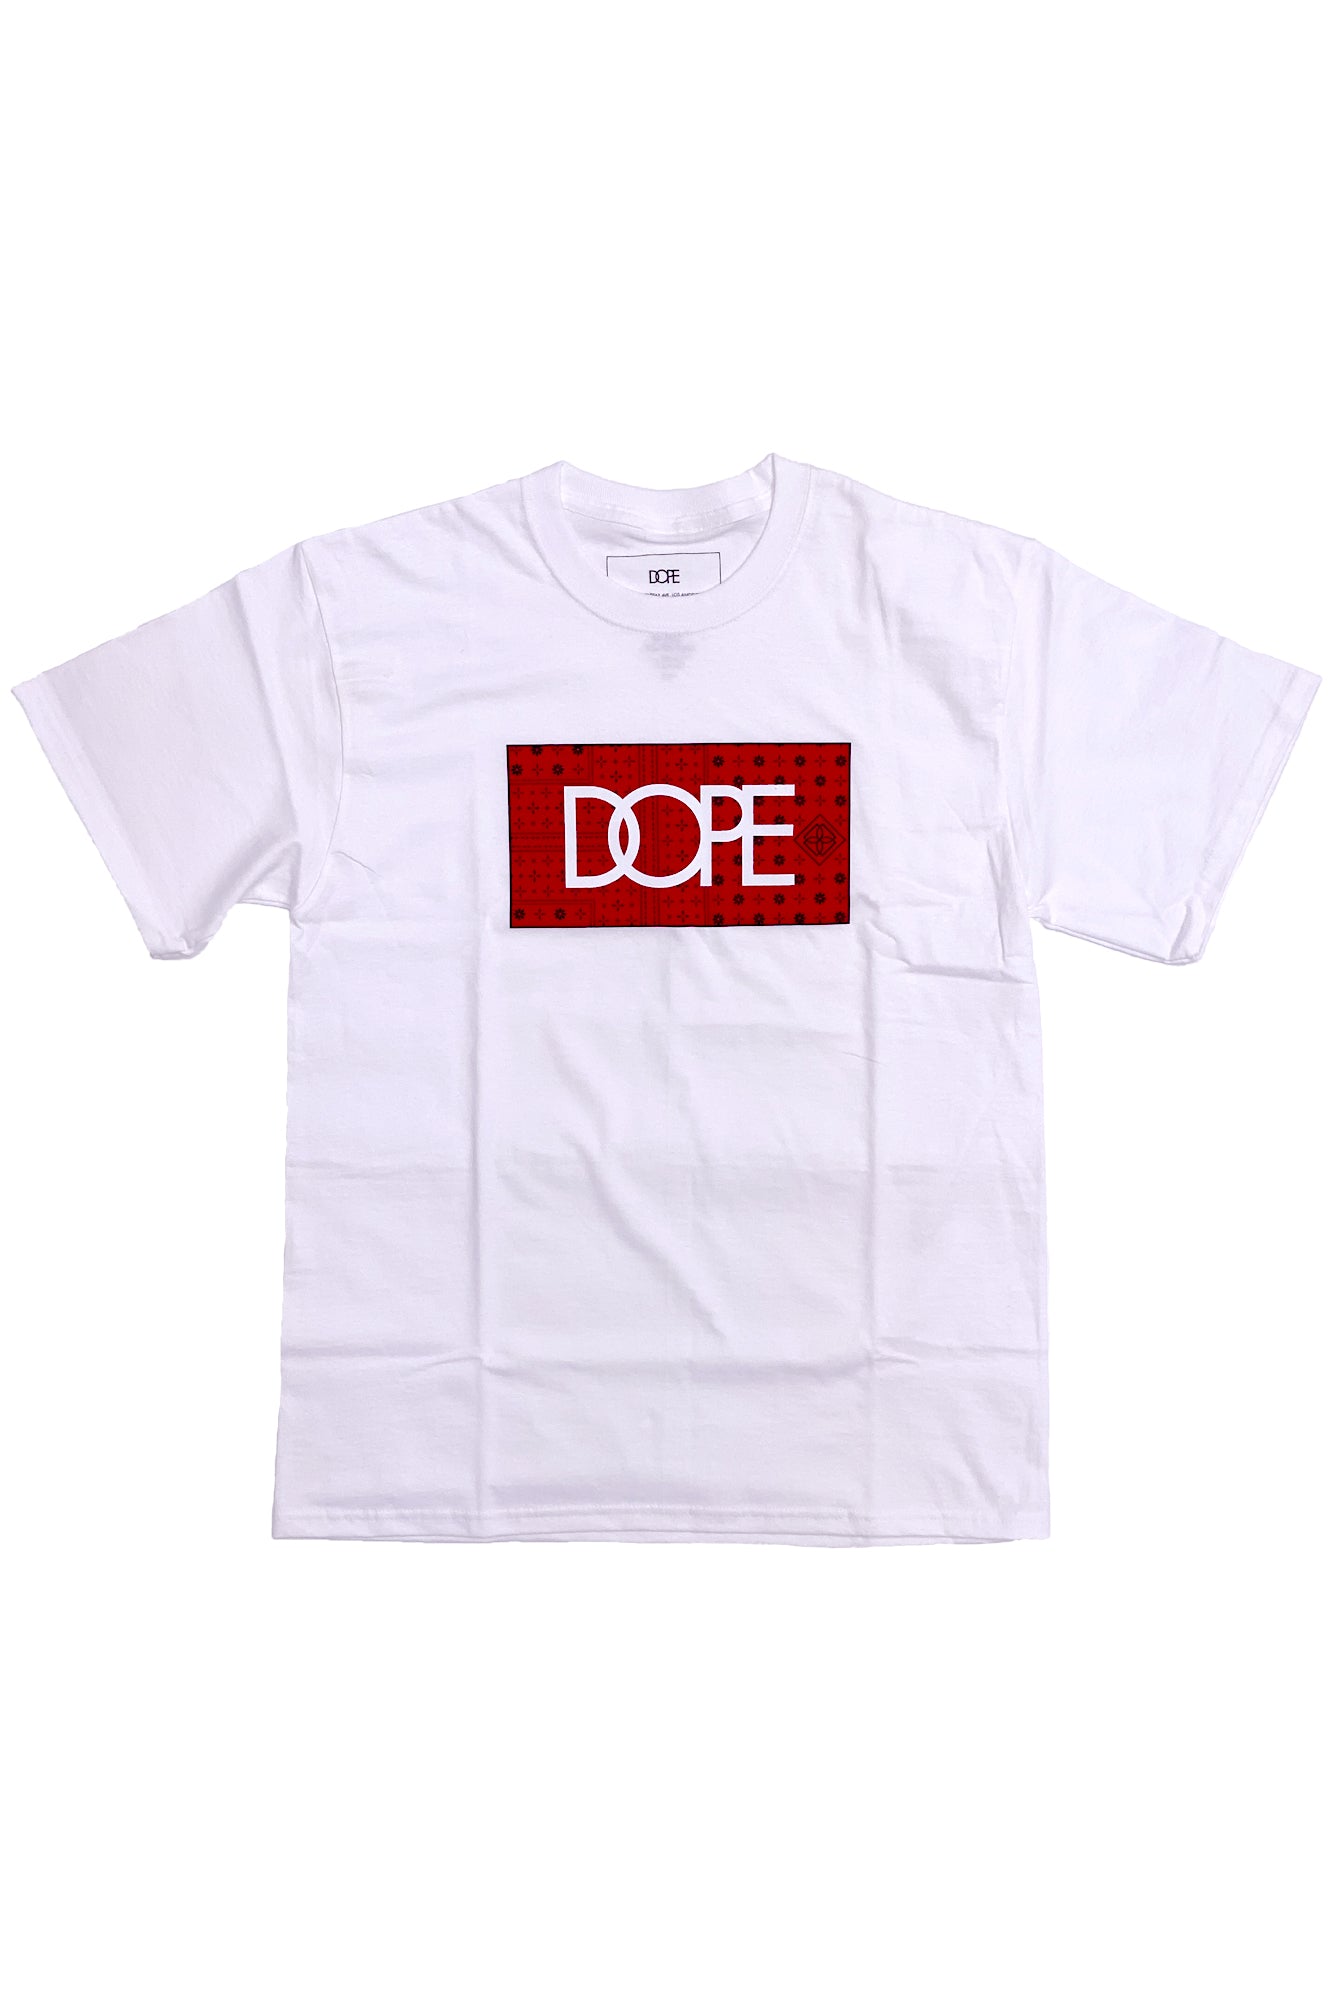 dope clothing websites